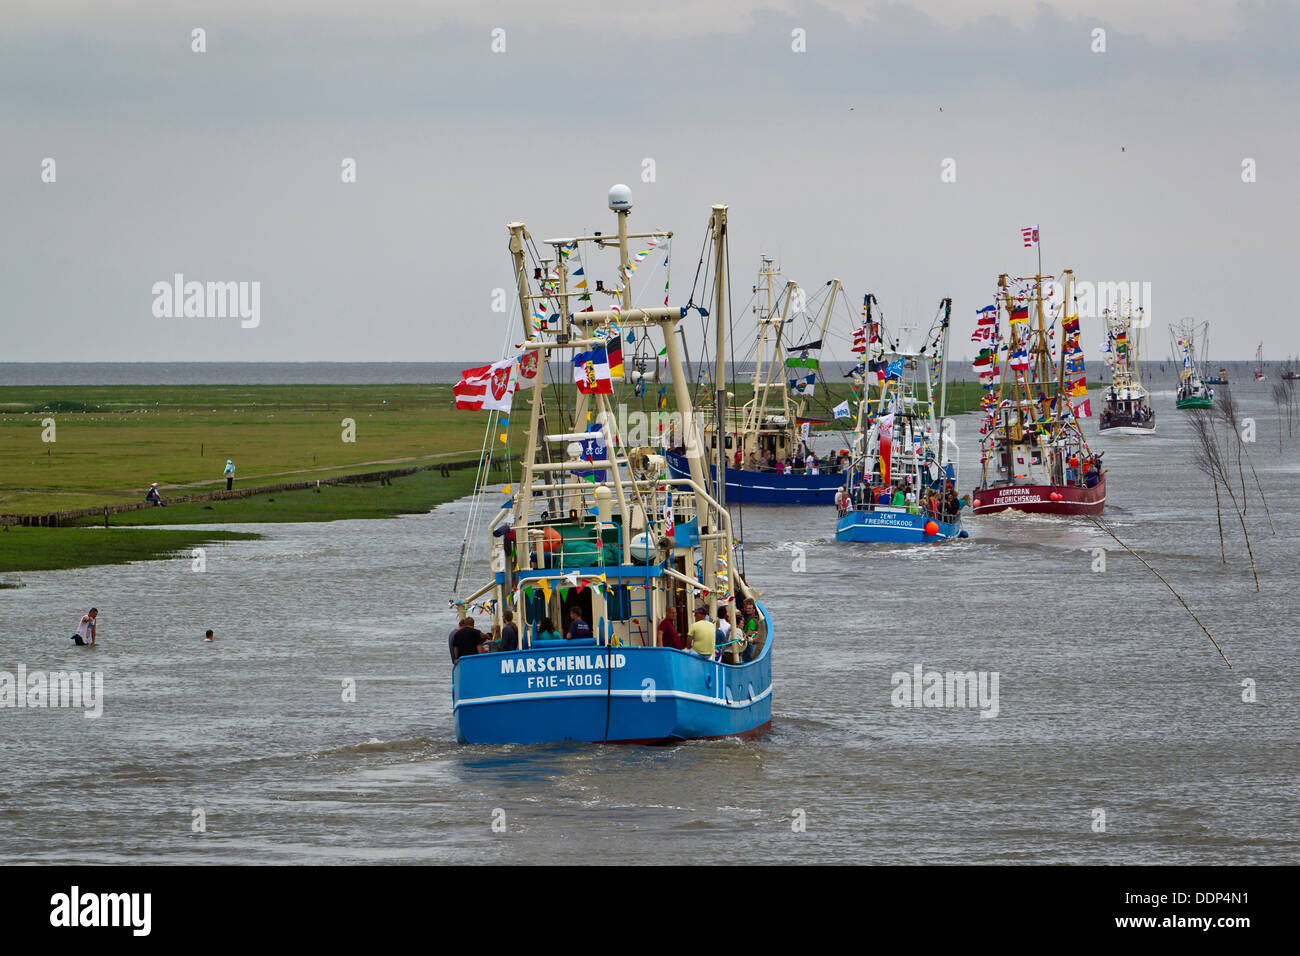 Regatta of fishing boats, Friedrichskoog, Schleswig-Holstein, Germany, Europe Stock Photo